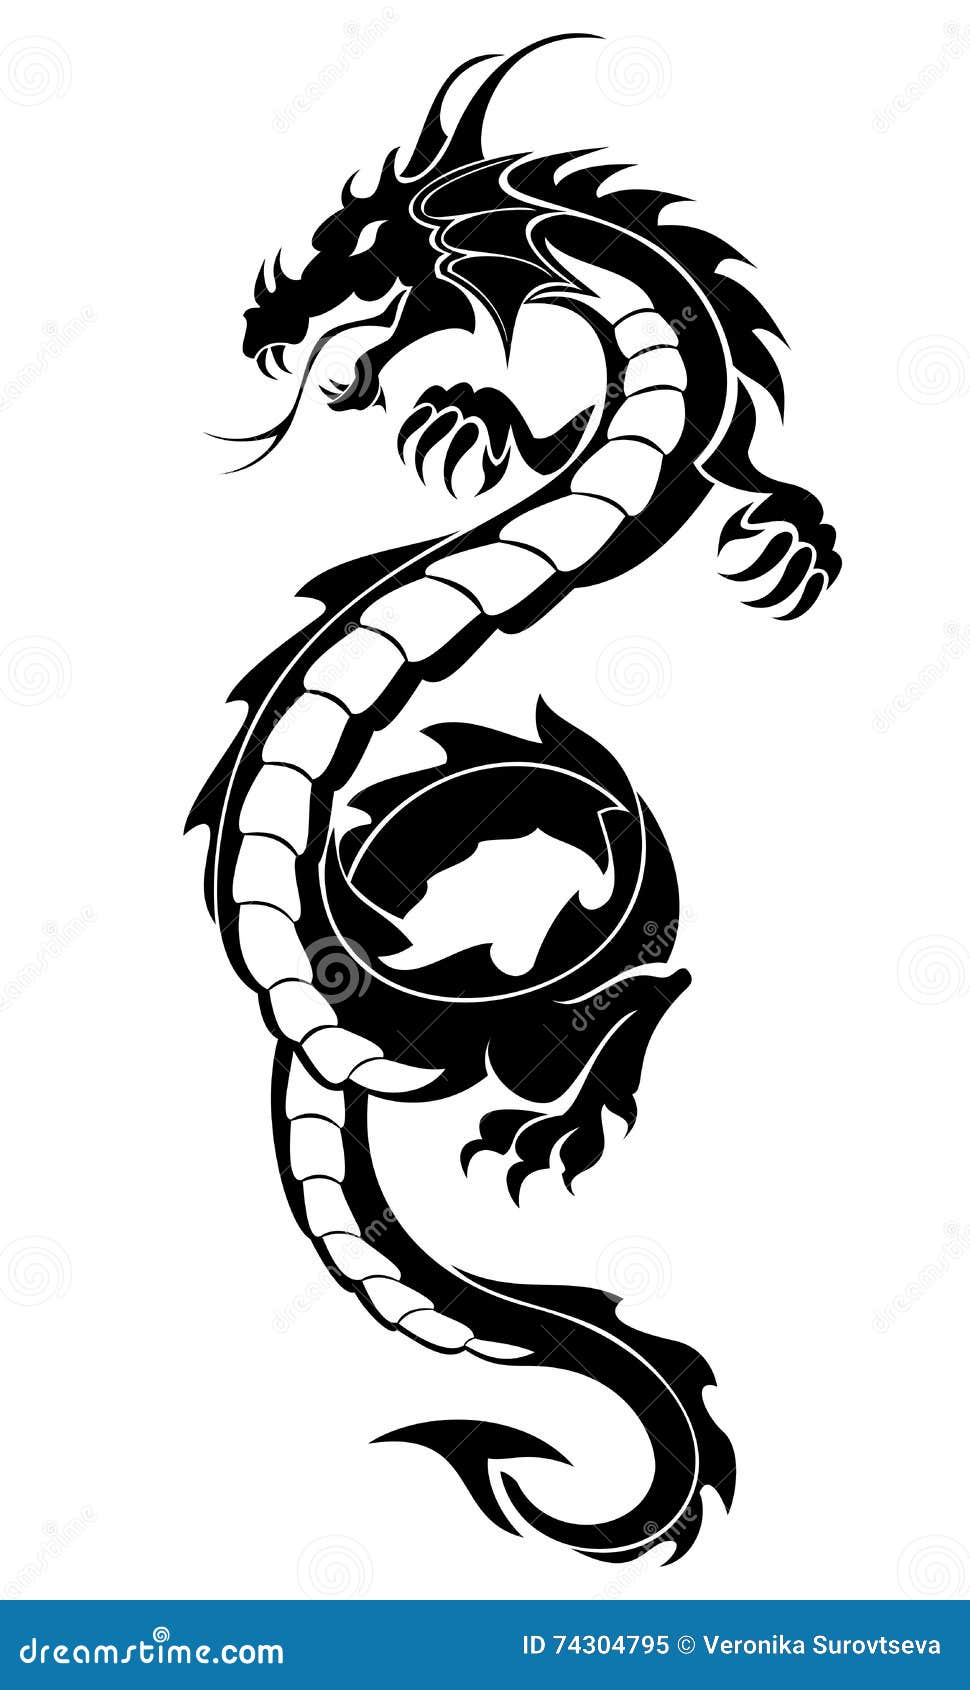 Tribal dragon tattoo stock vector. Illustration of legend - 74304795